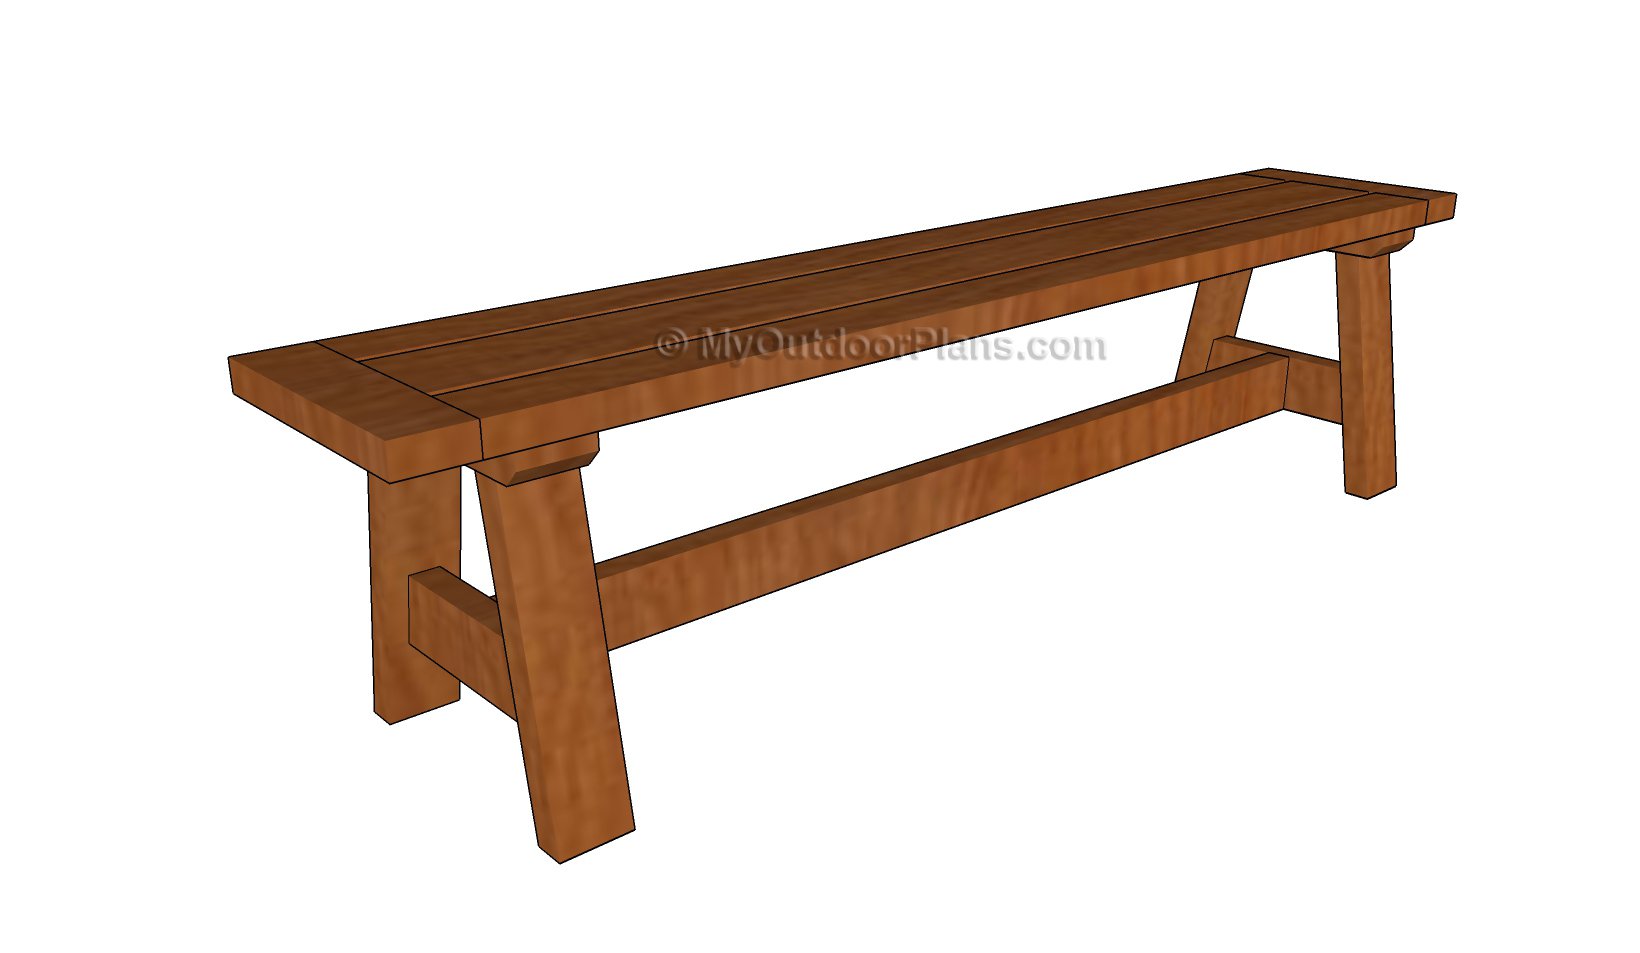 Wood Bench Seat Plans